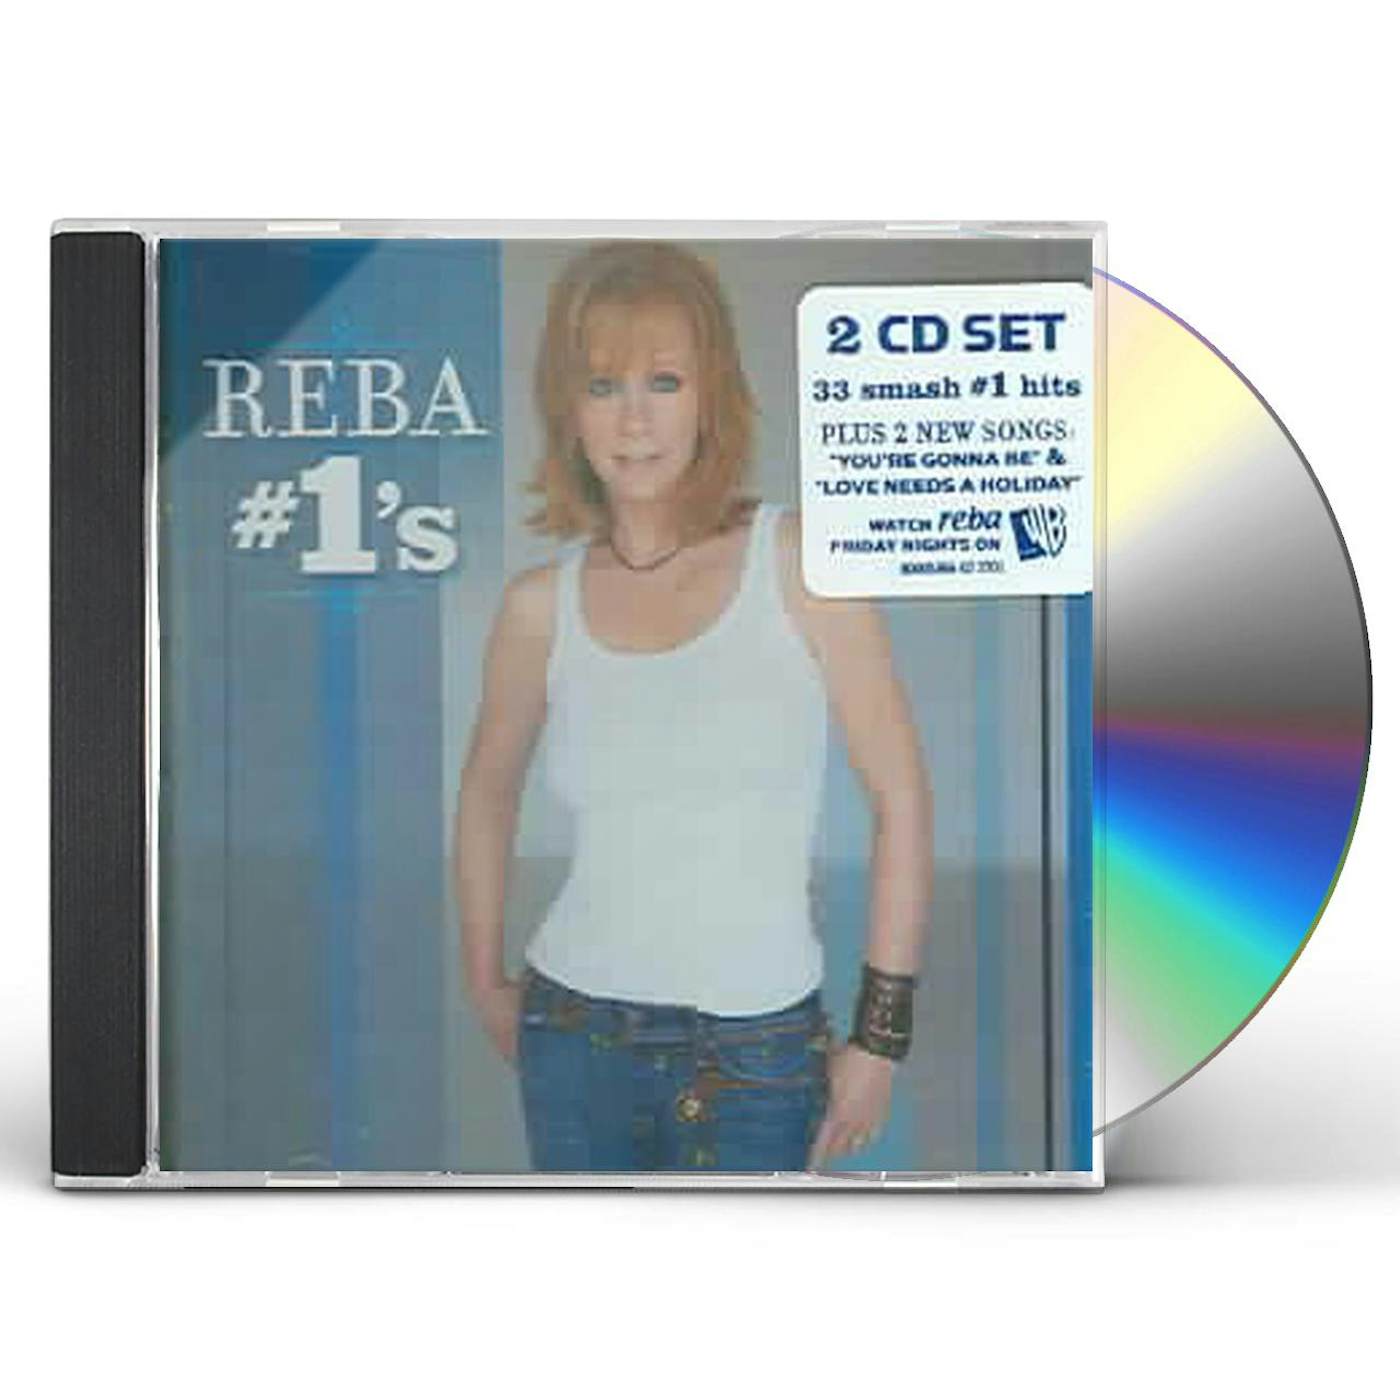 Reba McEntire #1'S CD